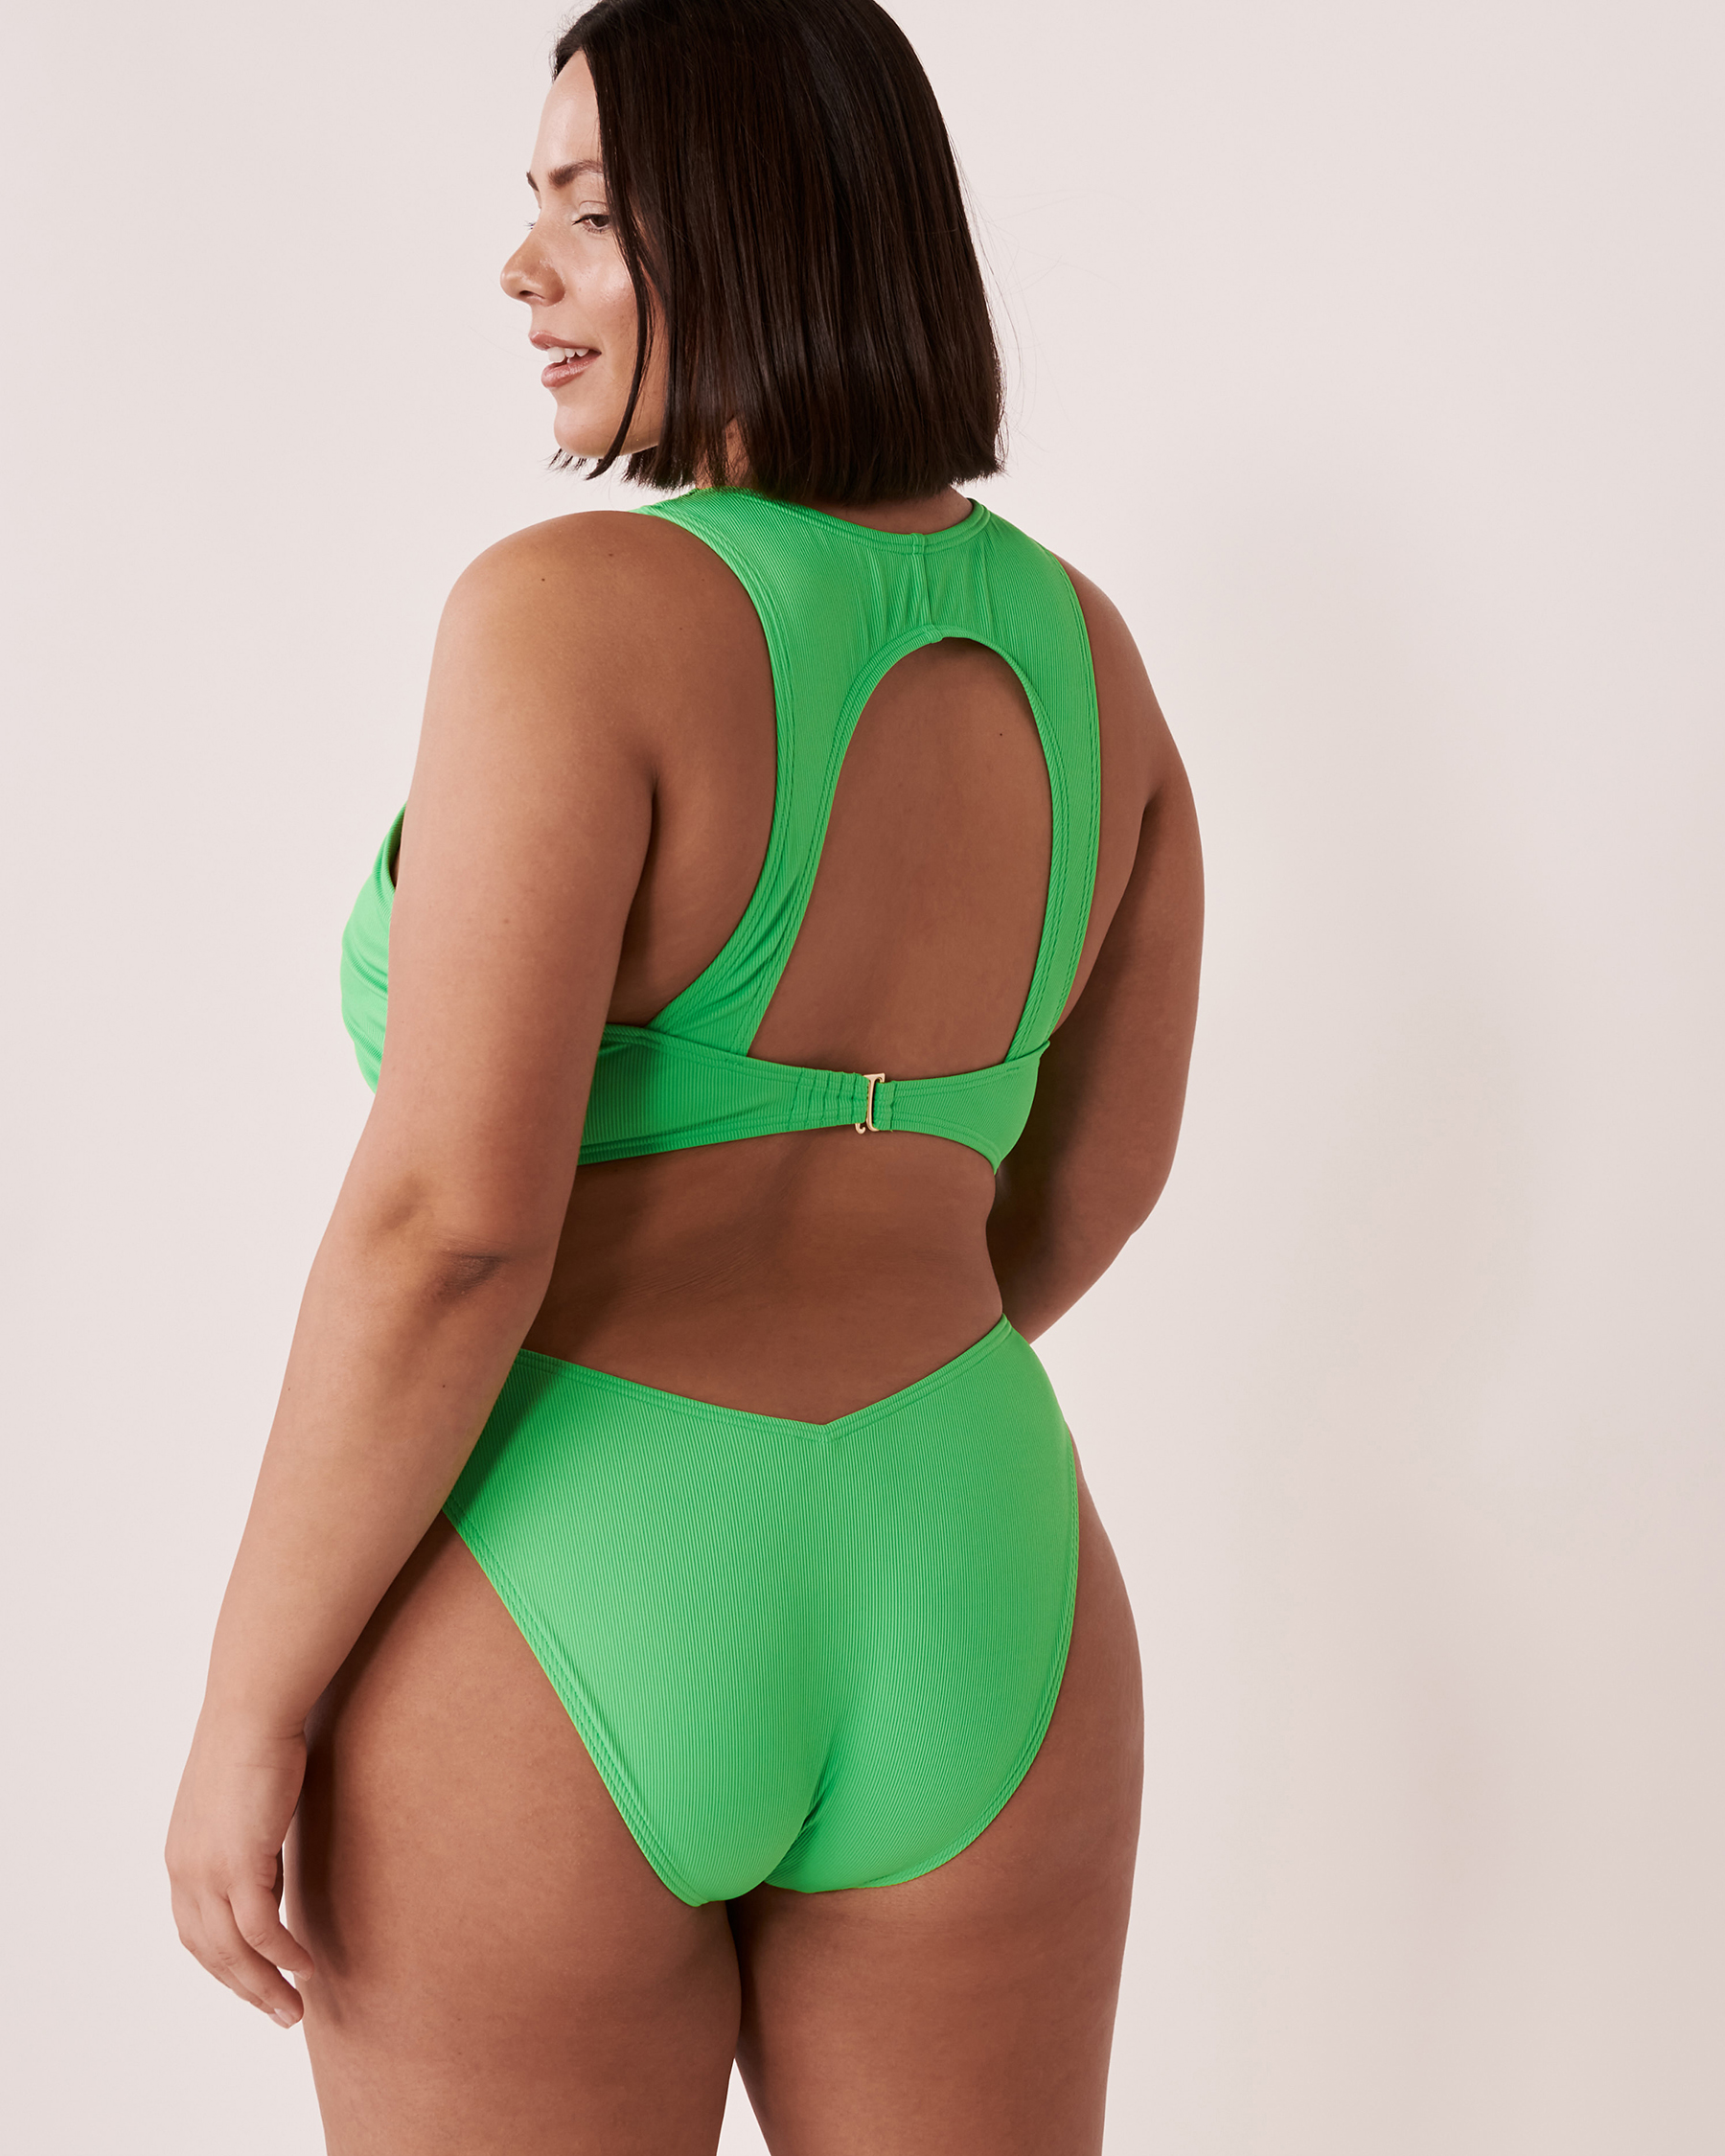 LA VIE EN ROSE AQUA TOUCAN Recycled Fibers D Cup Bikini Top Neon green 70200037 - View4